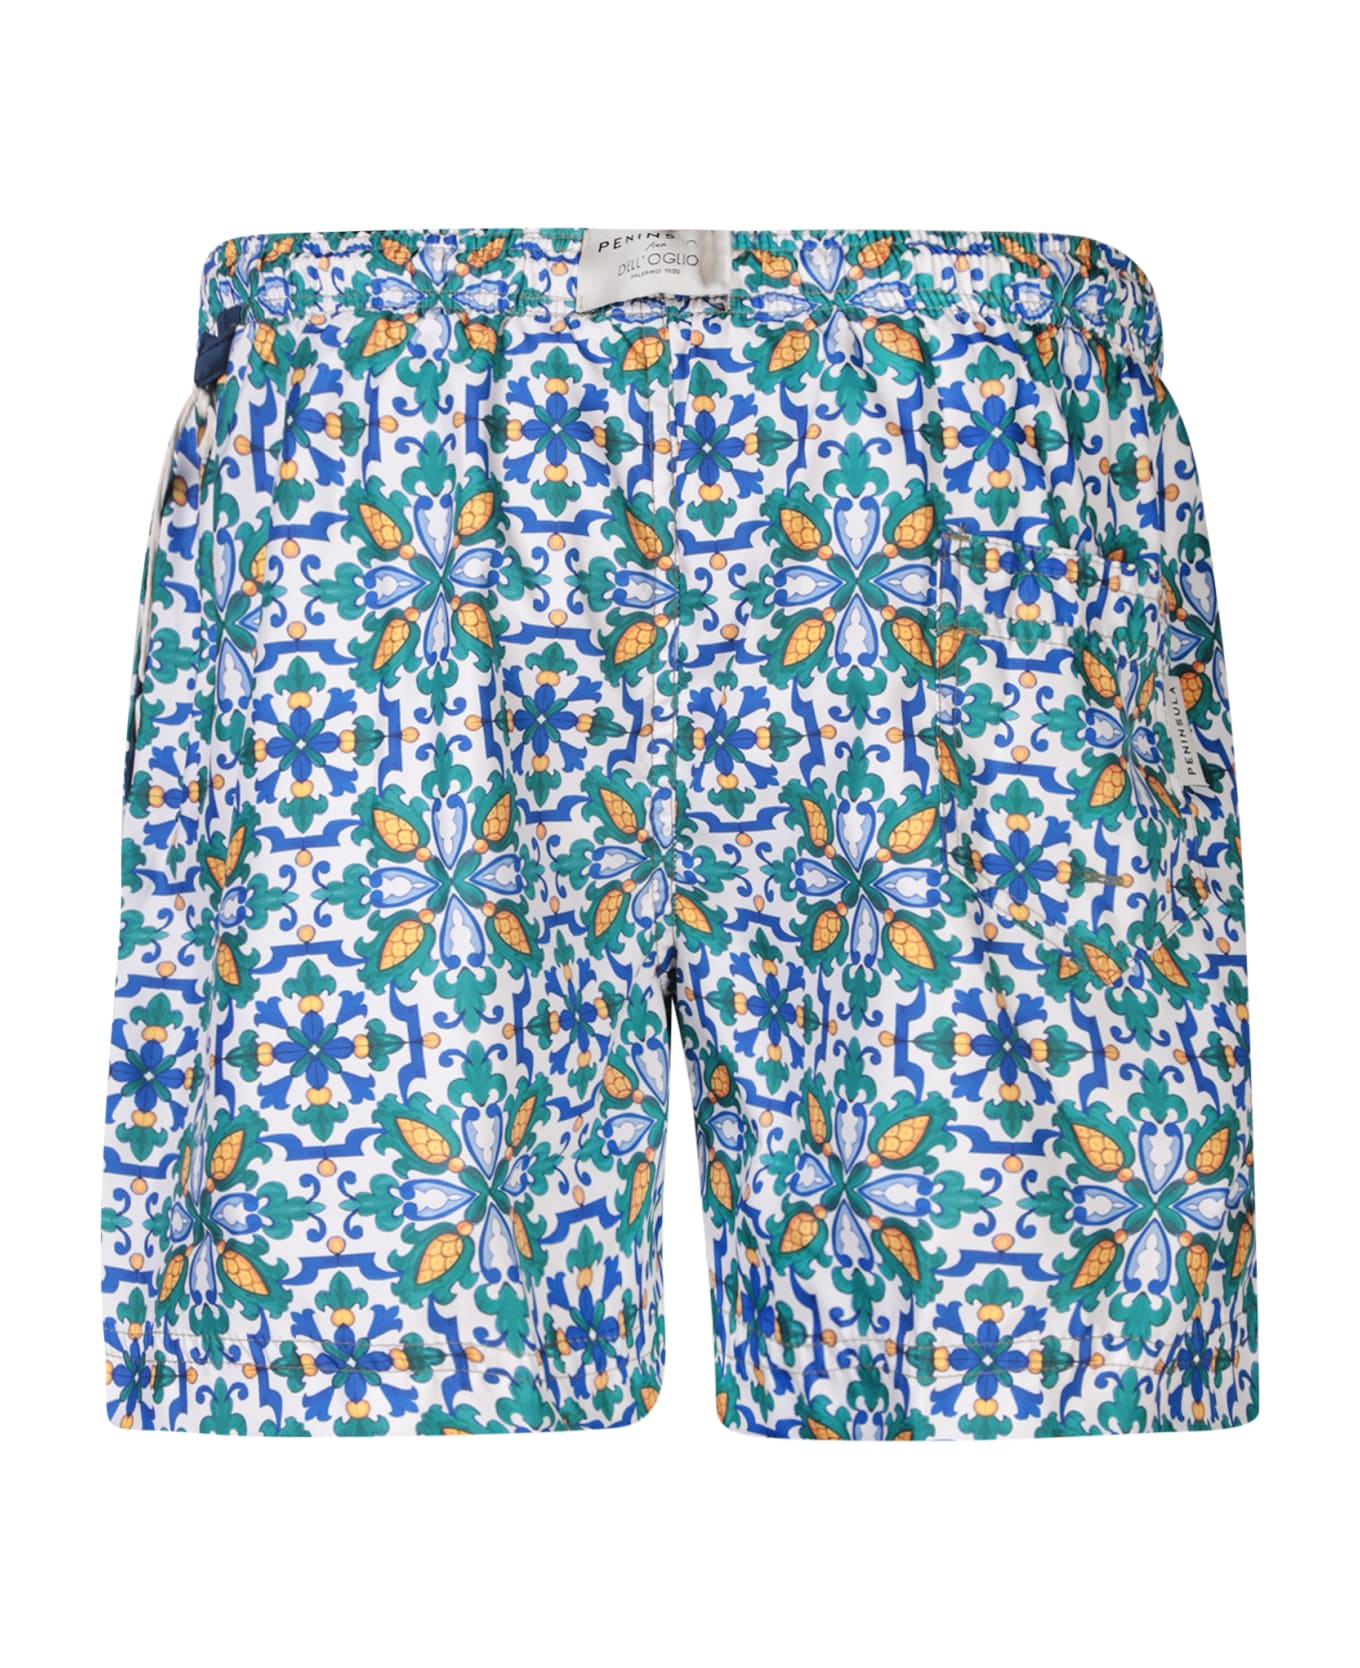 Peninsula Swimwear Floral Print Blue Boxer Swim Shorts By Peninsula - Blue